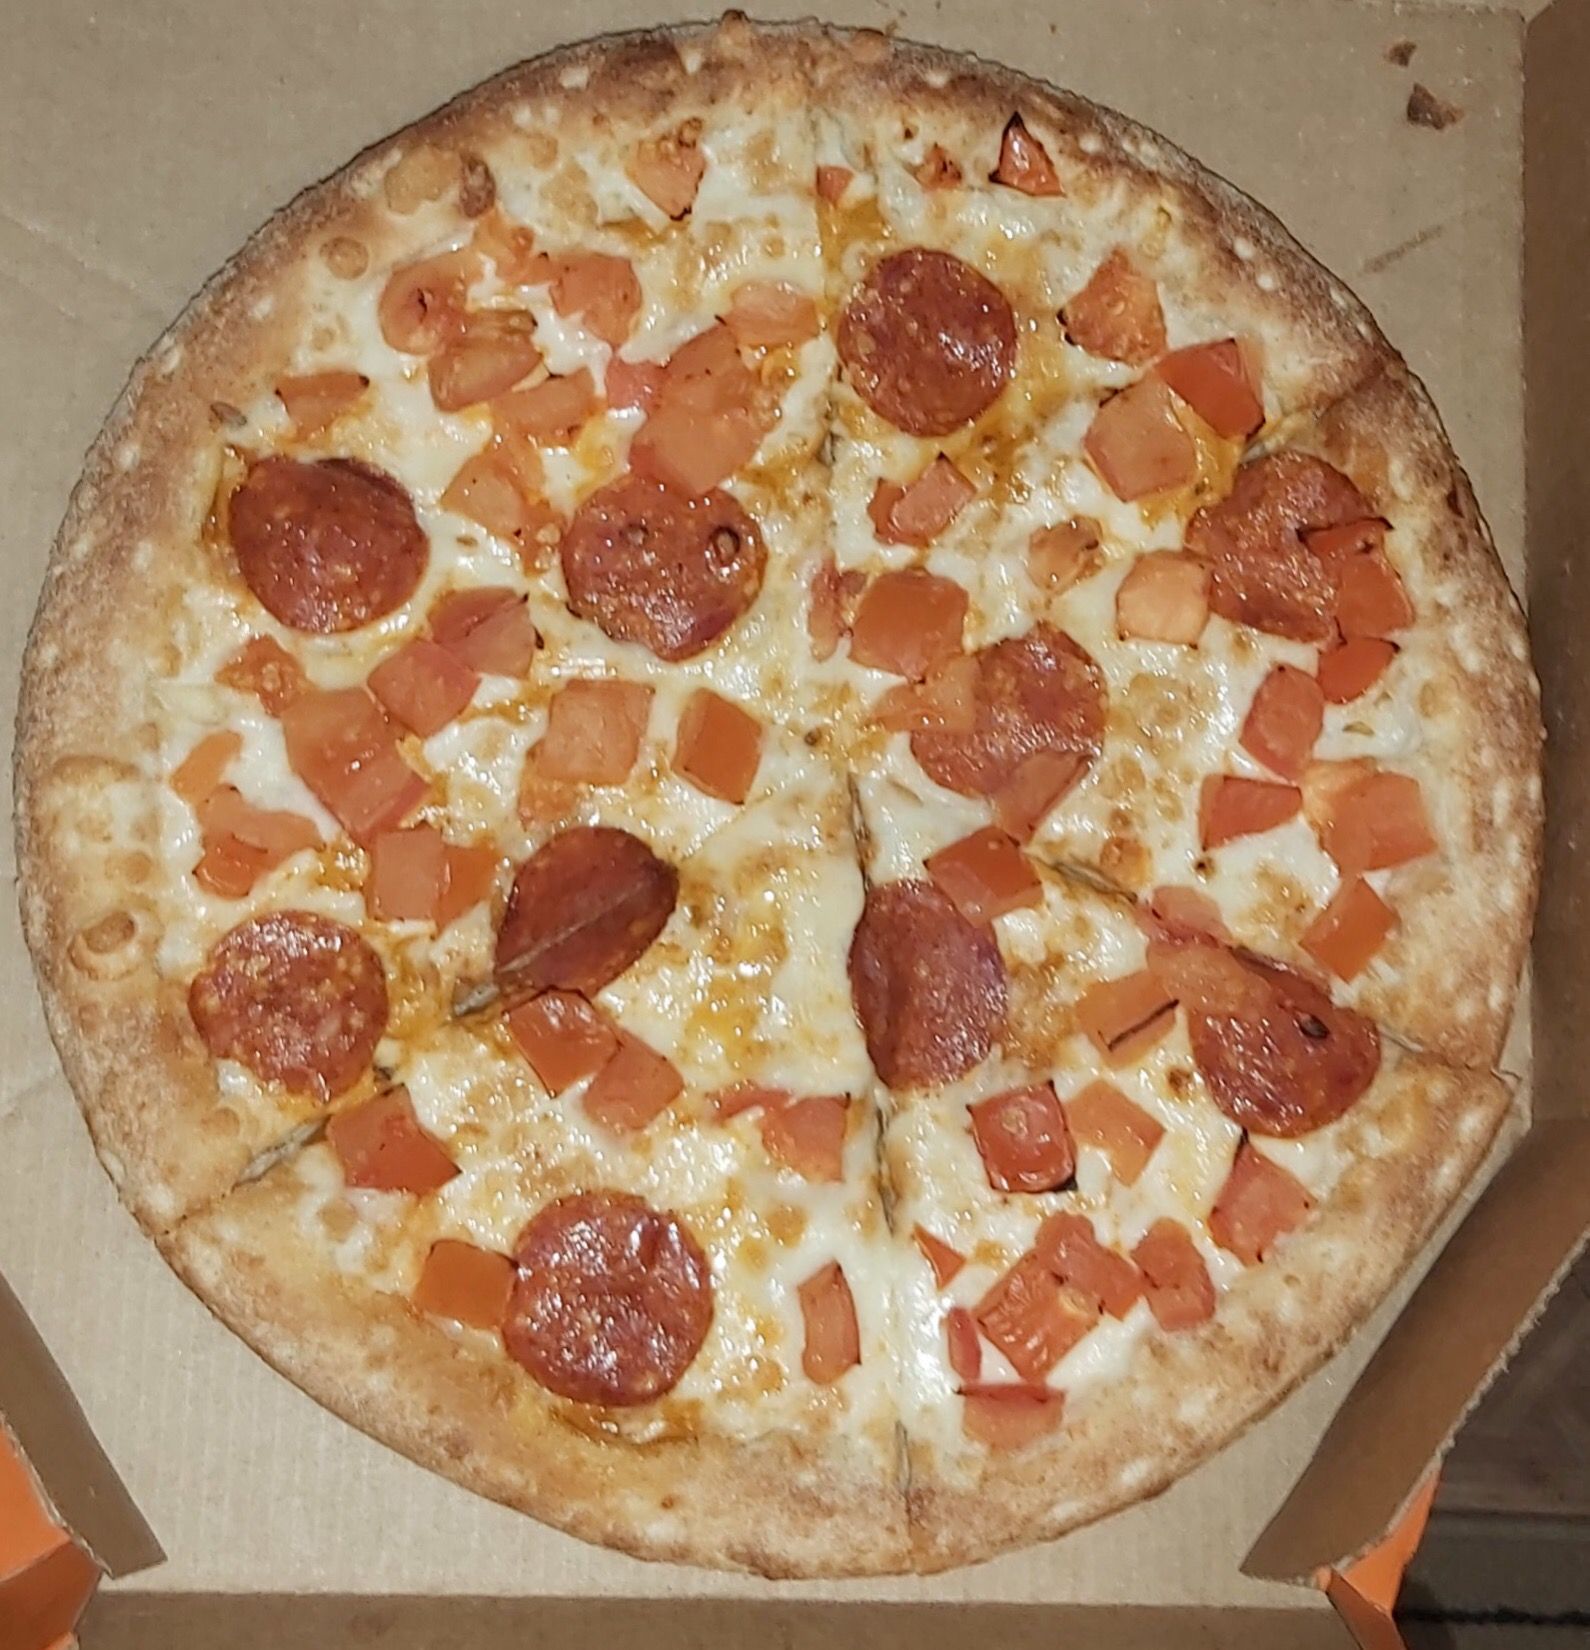 сколько стоит пицца пепперони в додо пицце фото 110